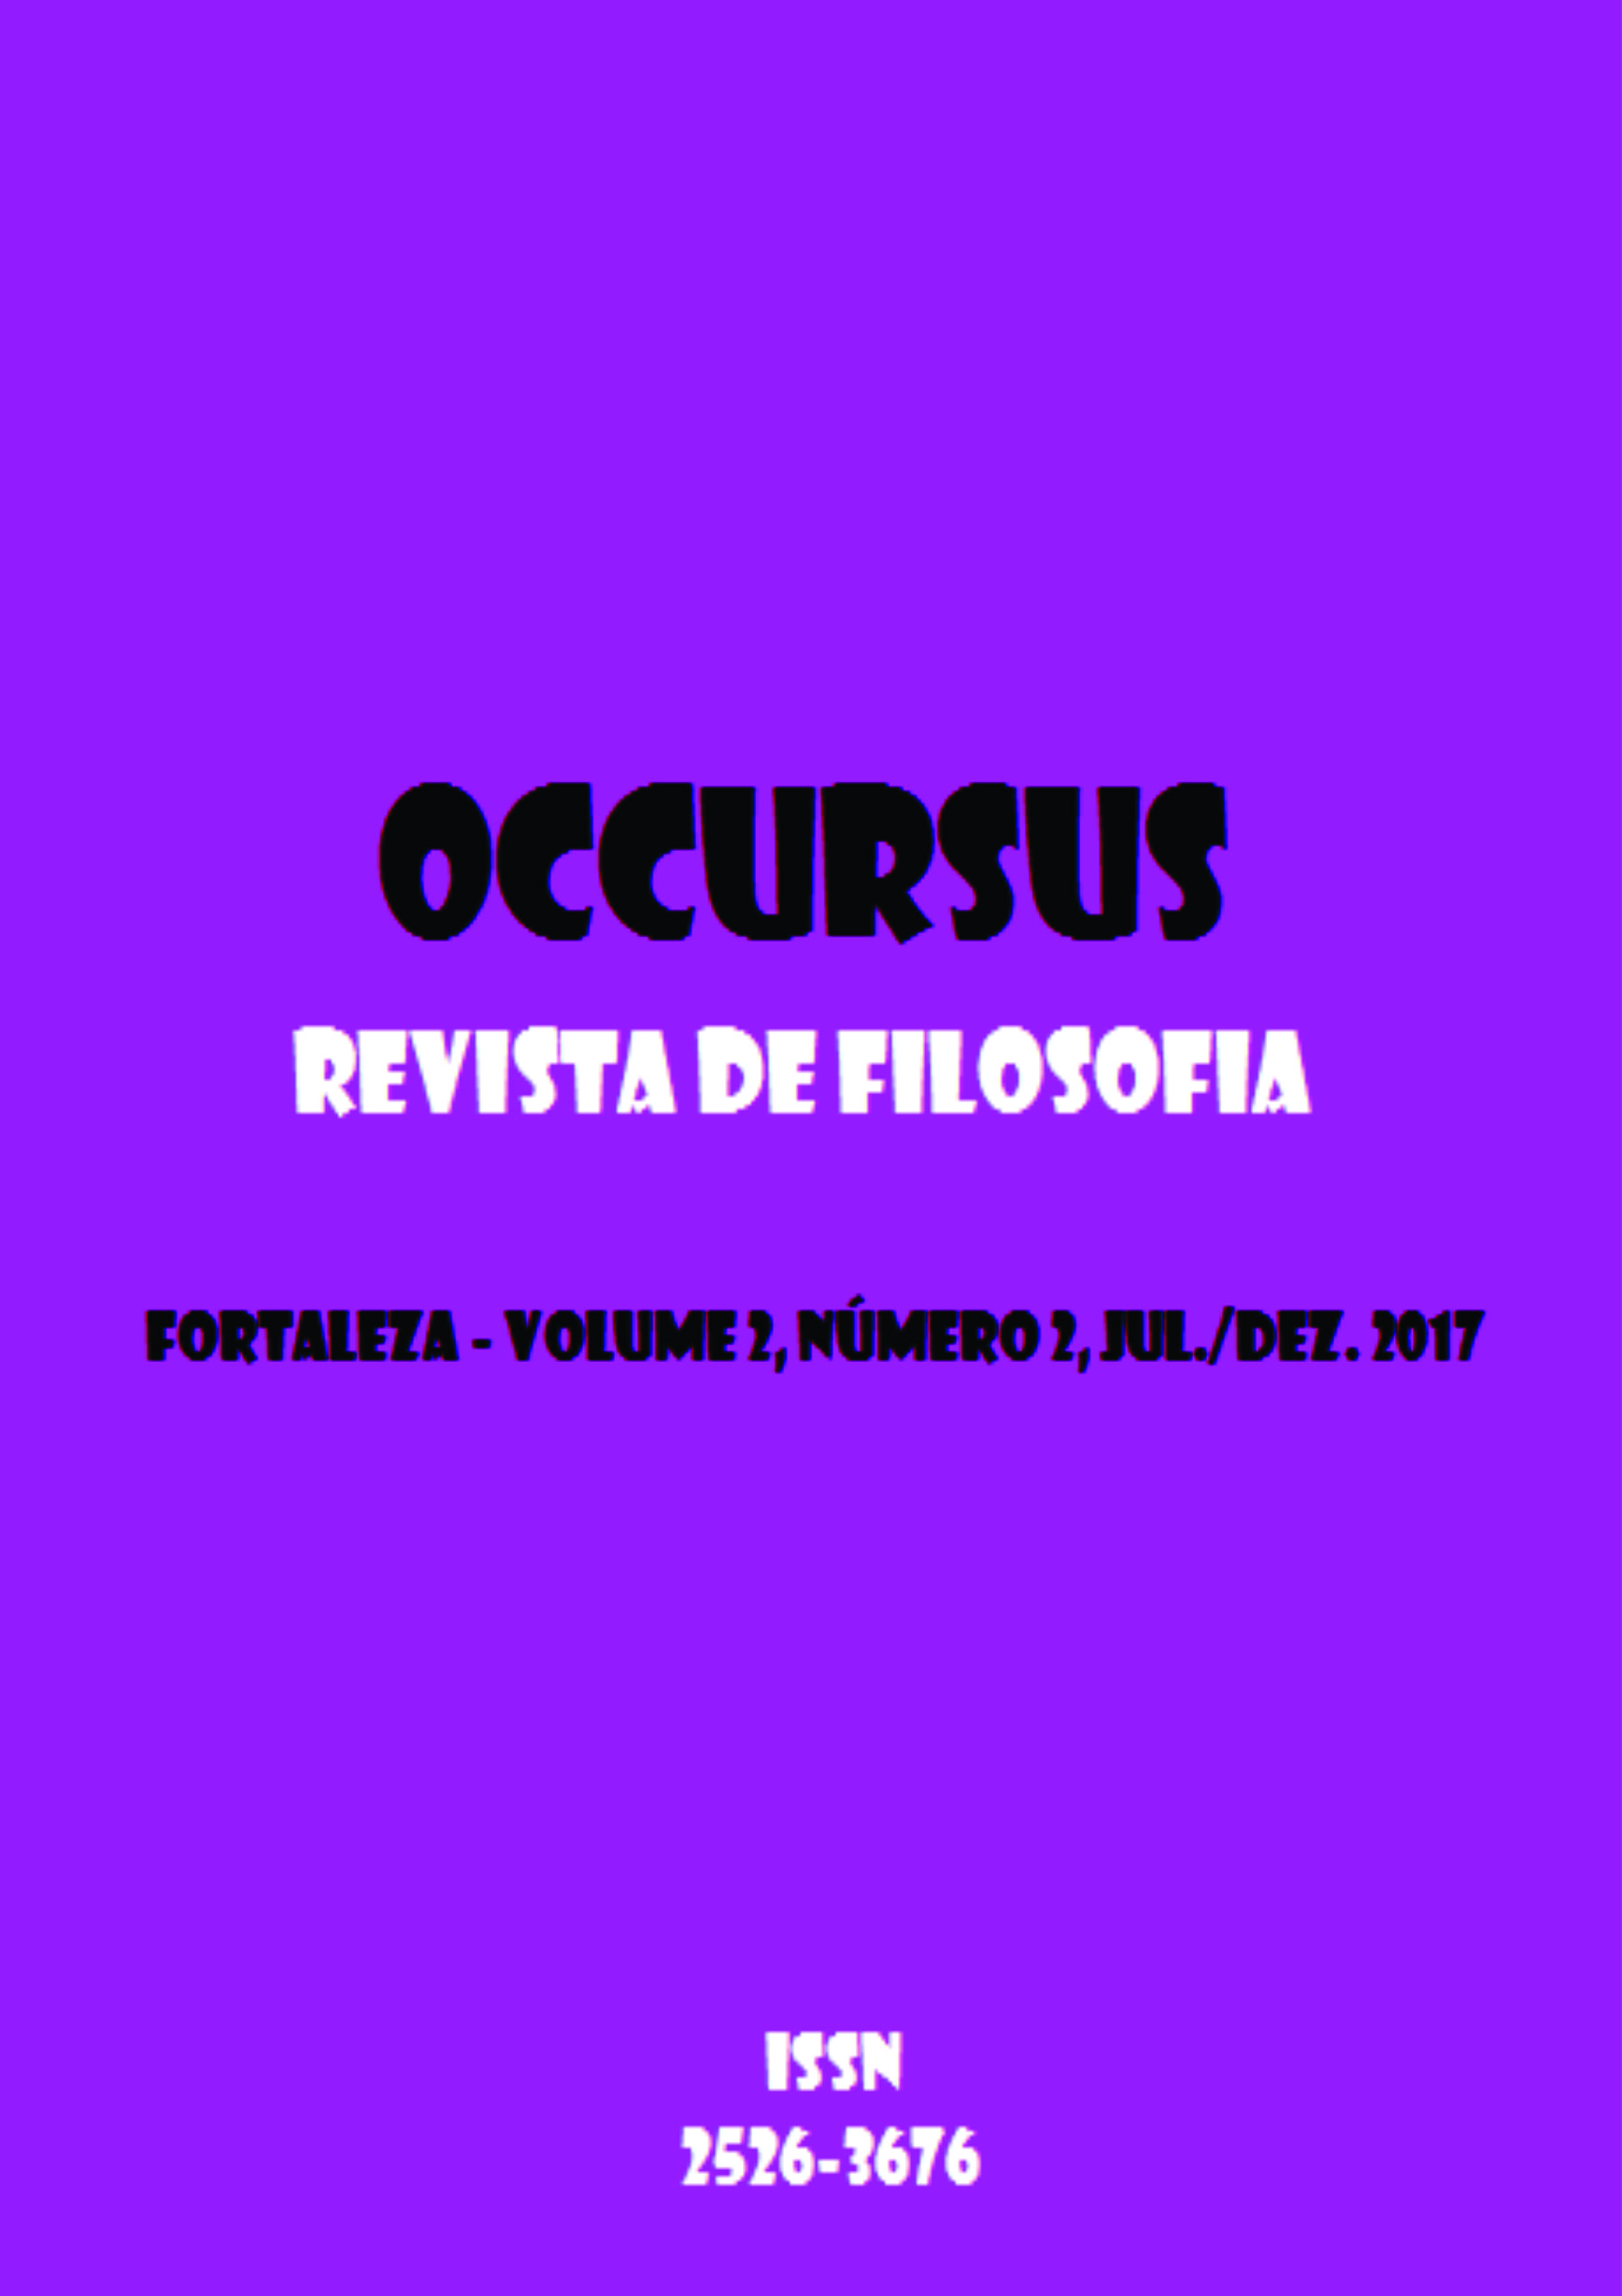 Occursus - Revista de Filosofia - V2N2 - Jul./Dez. 2017